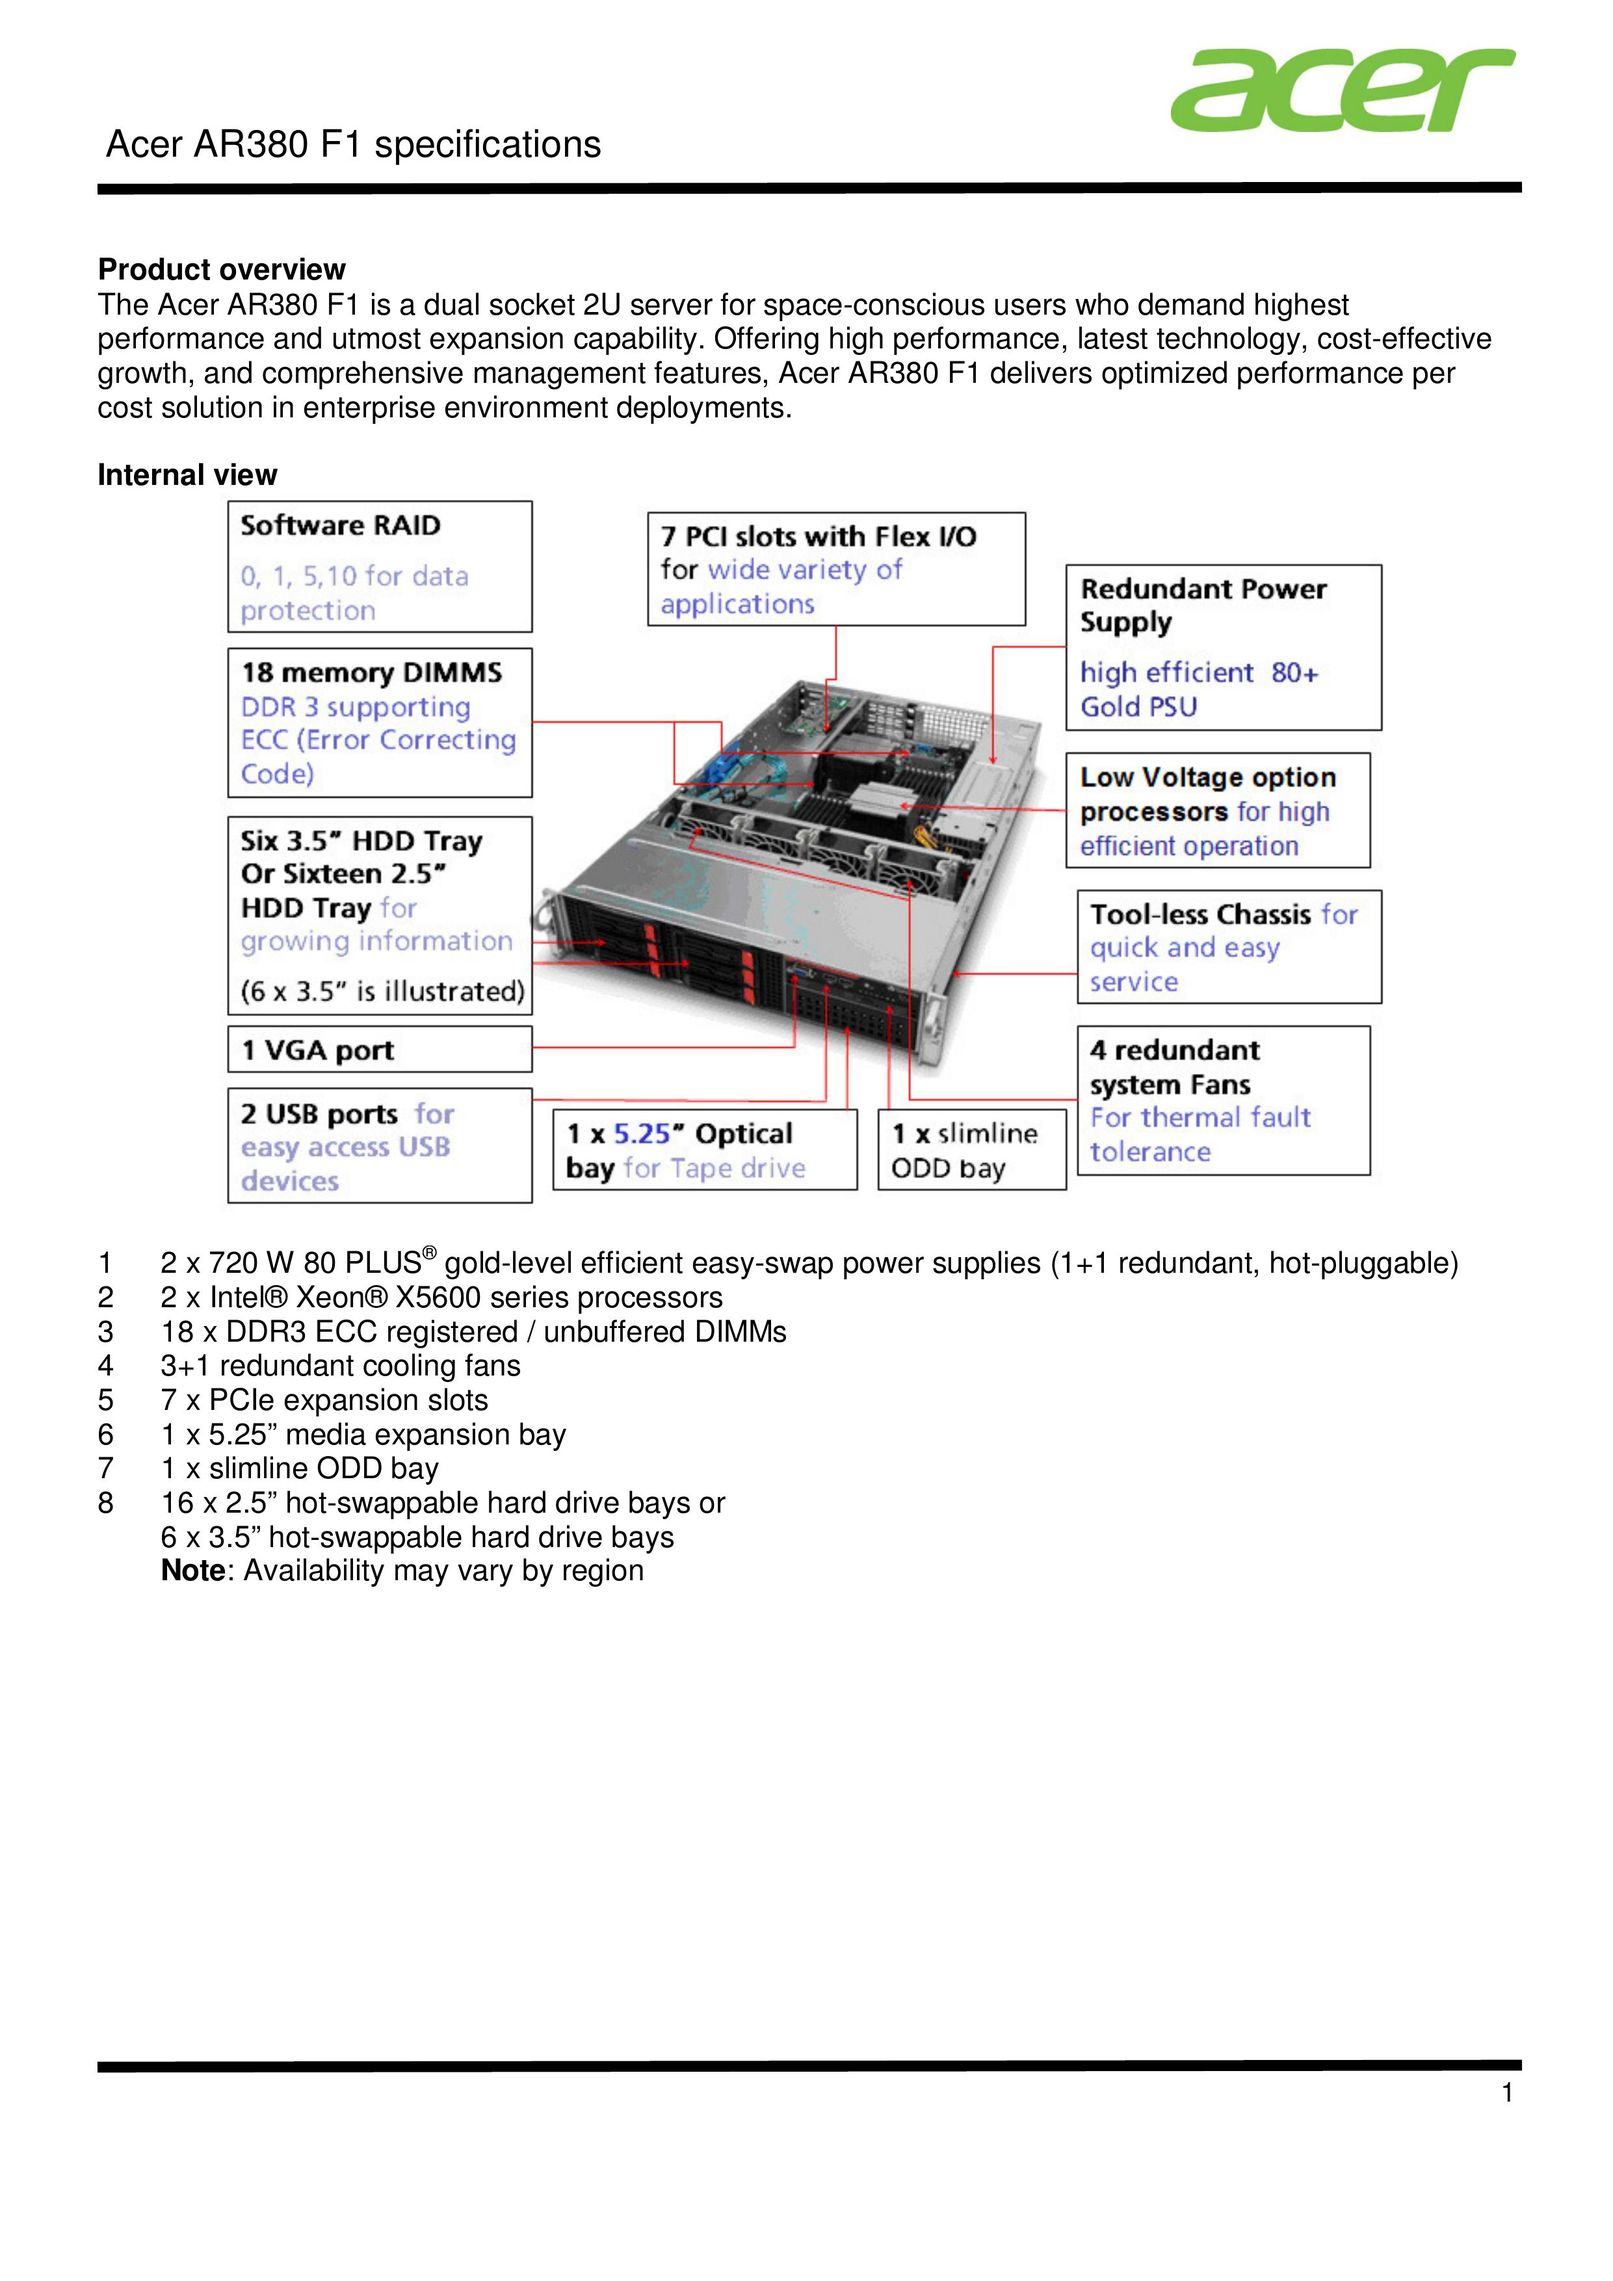 Acer AR380 F1 Server User Manual